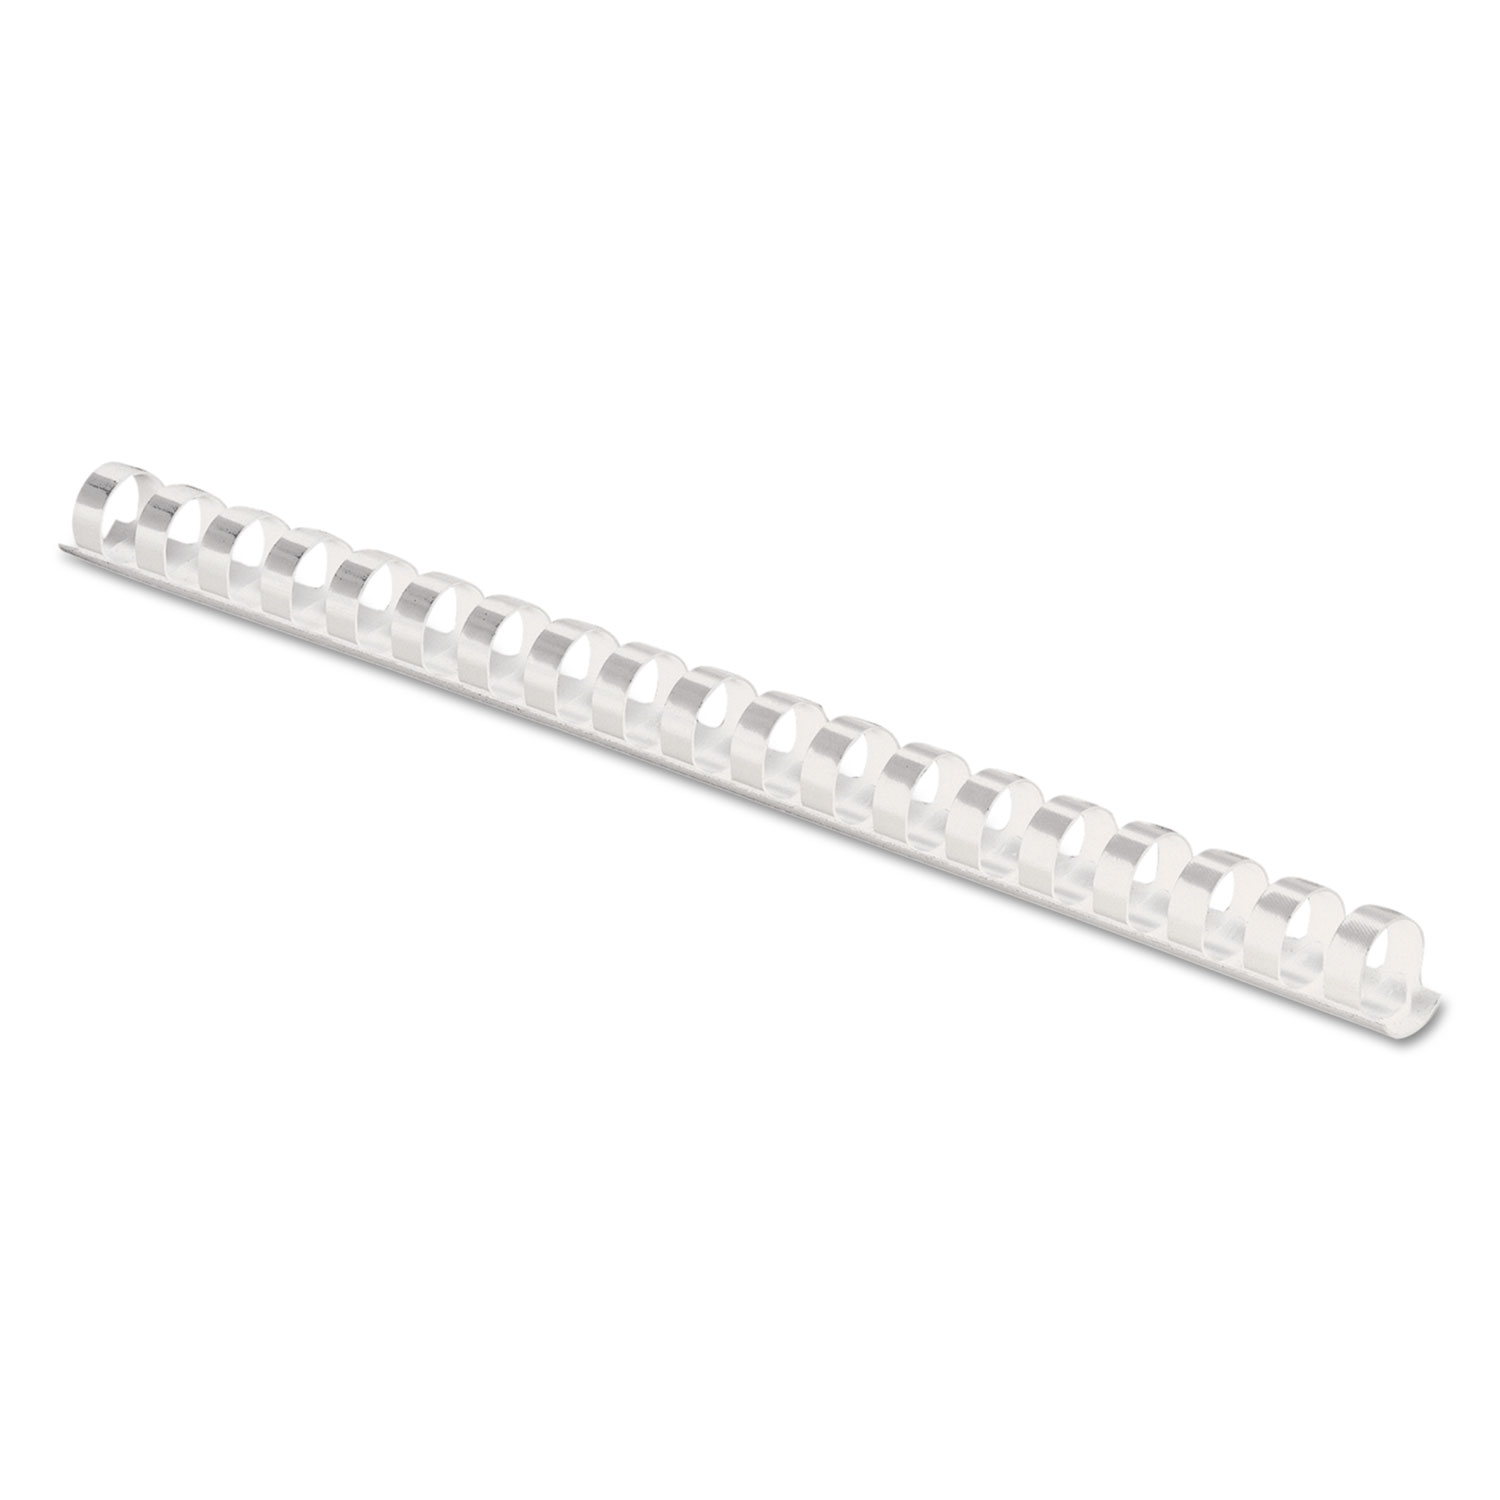  Fellowes 52371 Plastic Comb Bindings, 3/8 Diameter, 55 Sheet Capacity, White, 100 Combs/Pack (FEL52371) 